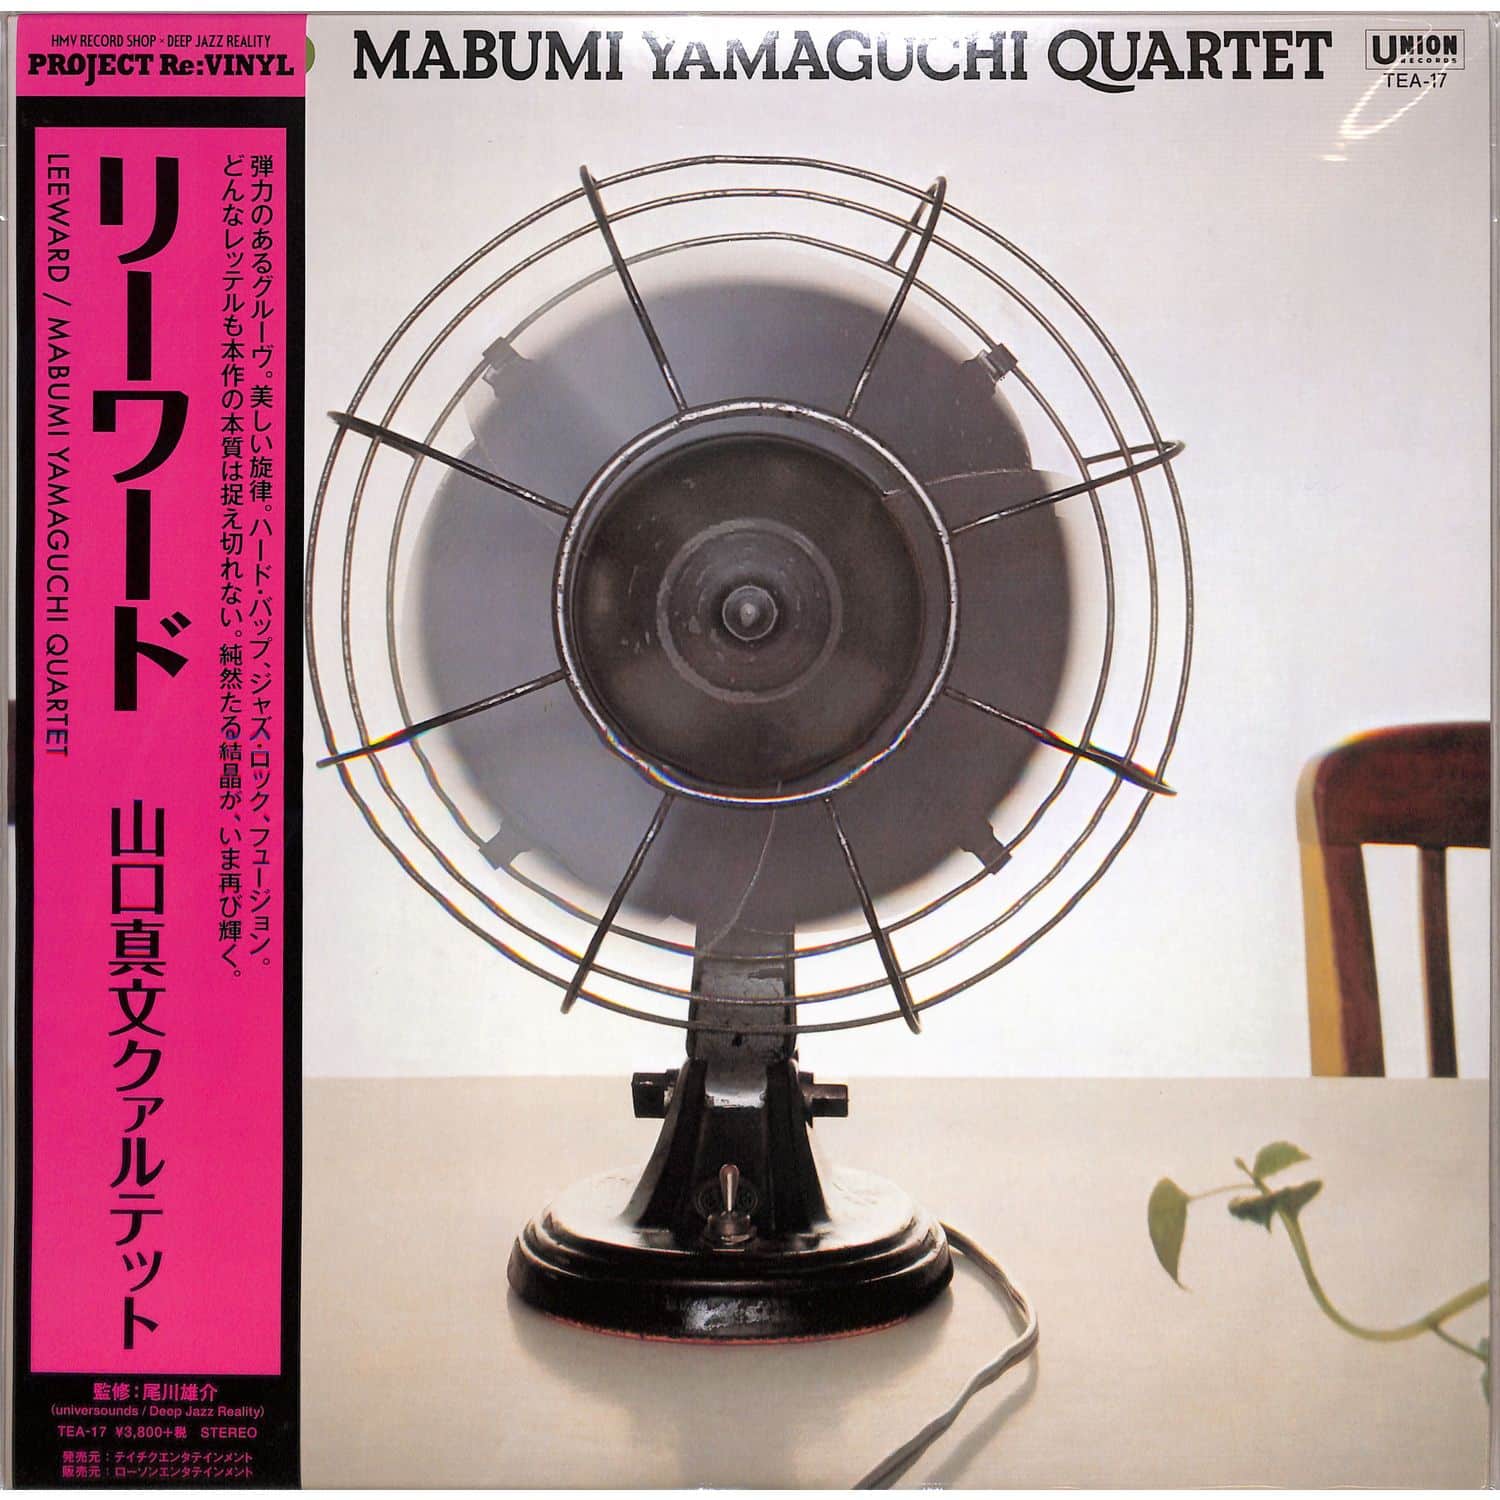 Mabumi Yamaguchi Quartet - LEEWARD 